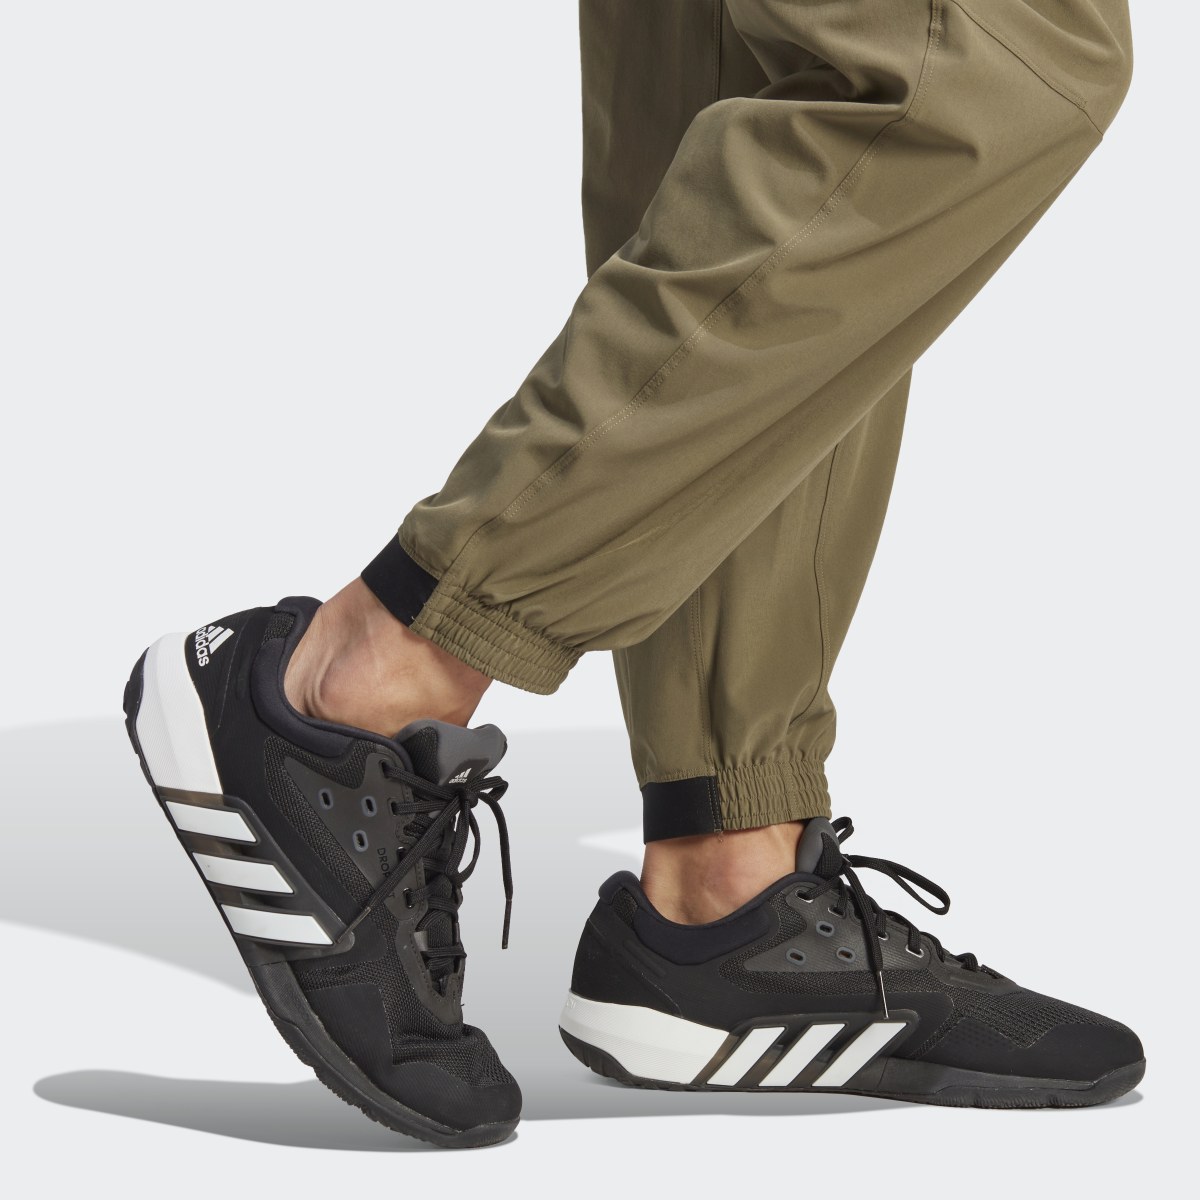 Adidas Pantalon Designed for Training Pro Series Strength. 8